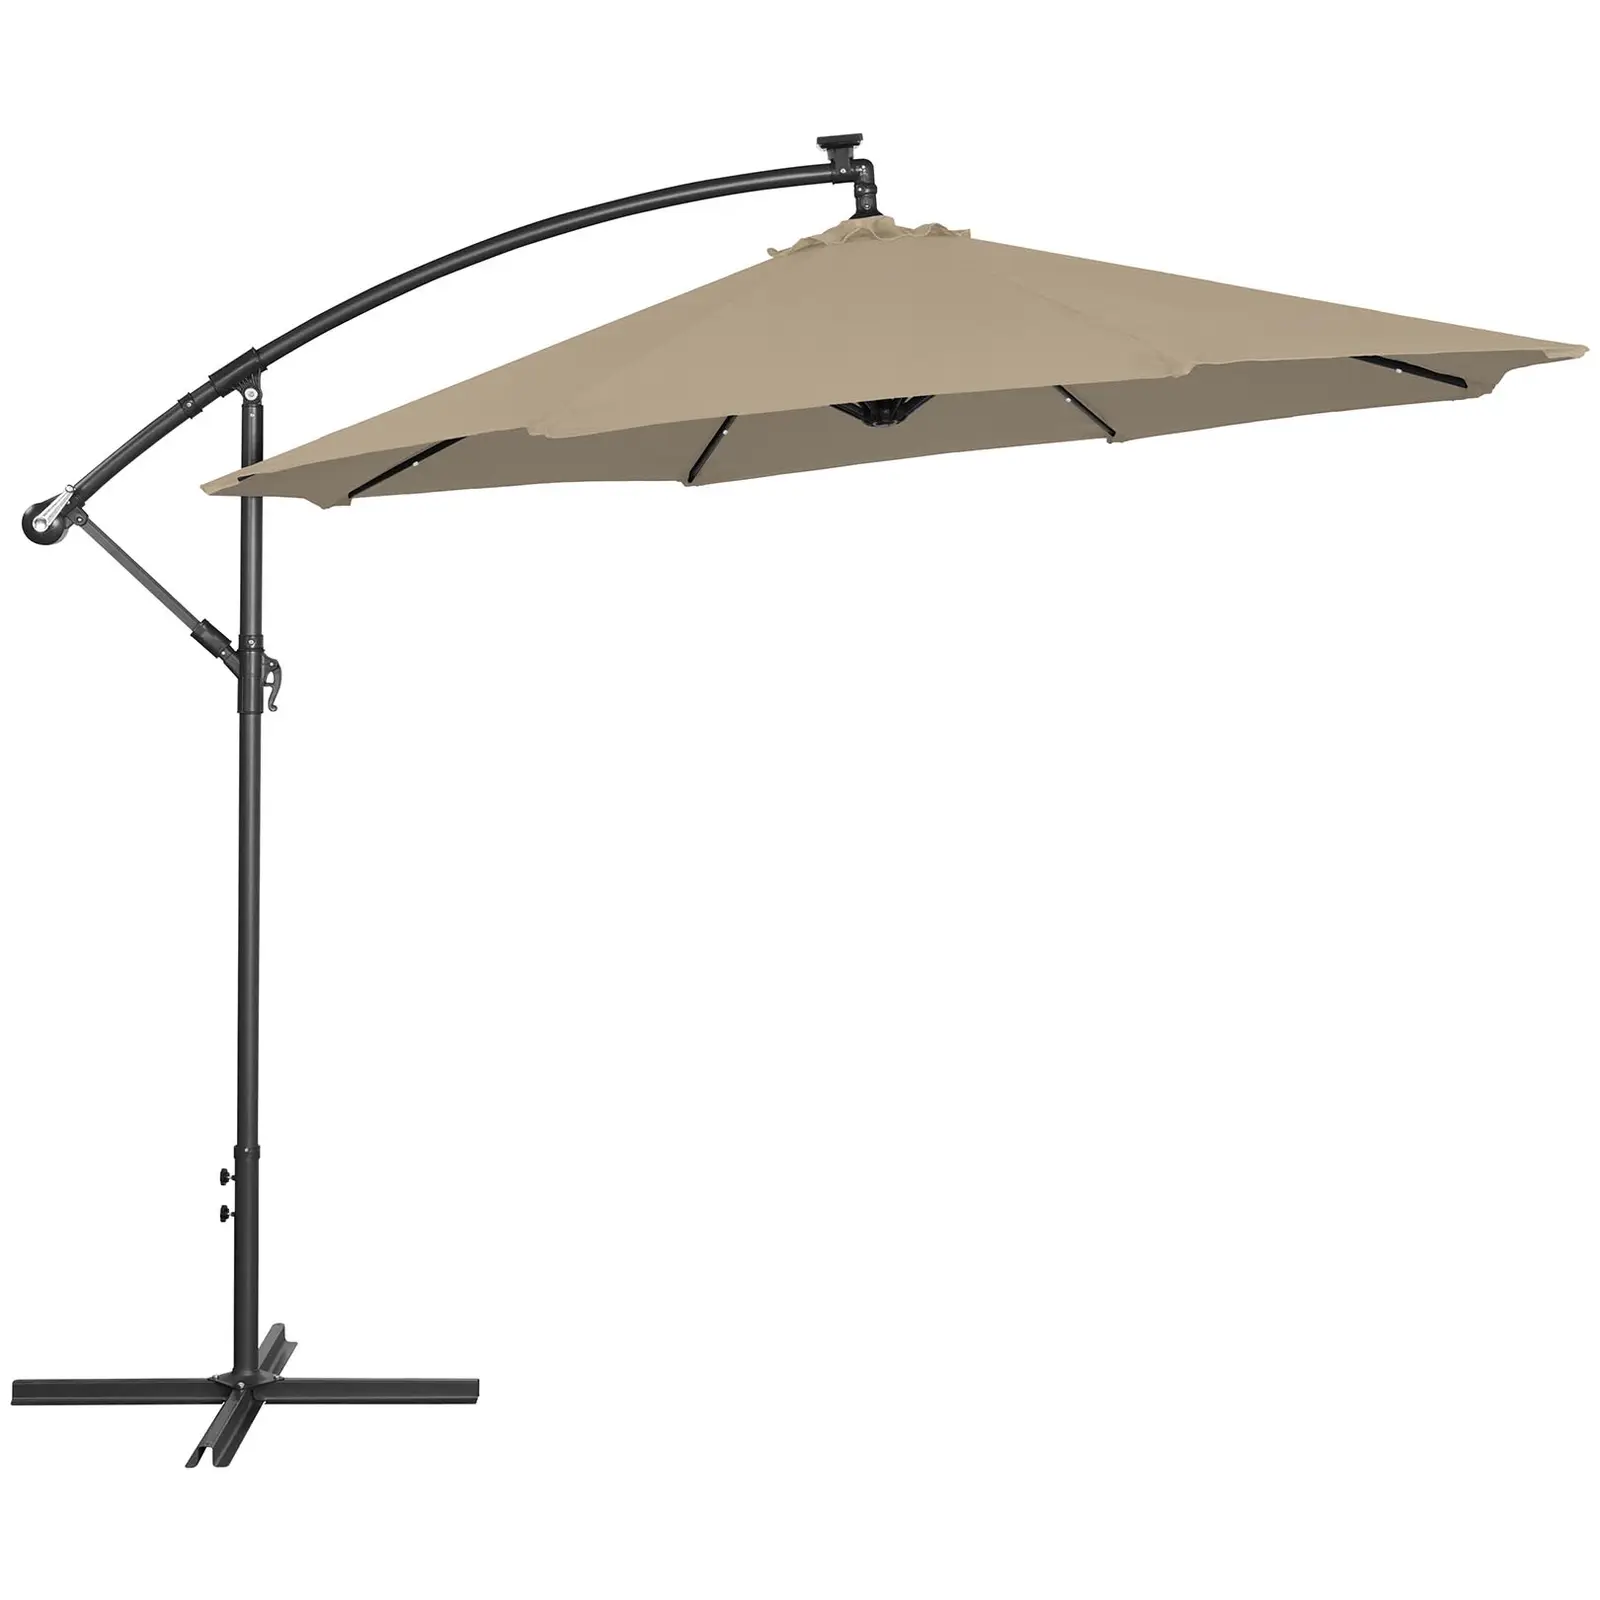 Parasol avec LED - Taupe - Rond - Ø 300 cm - Inclinable